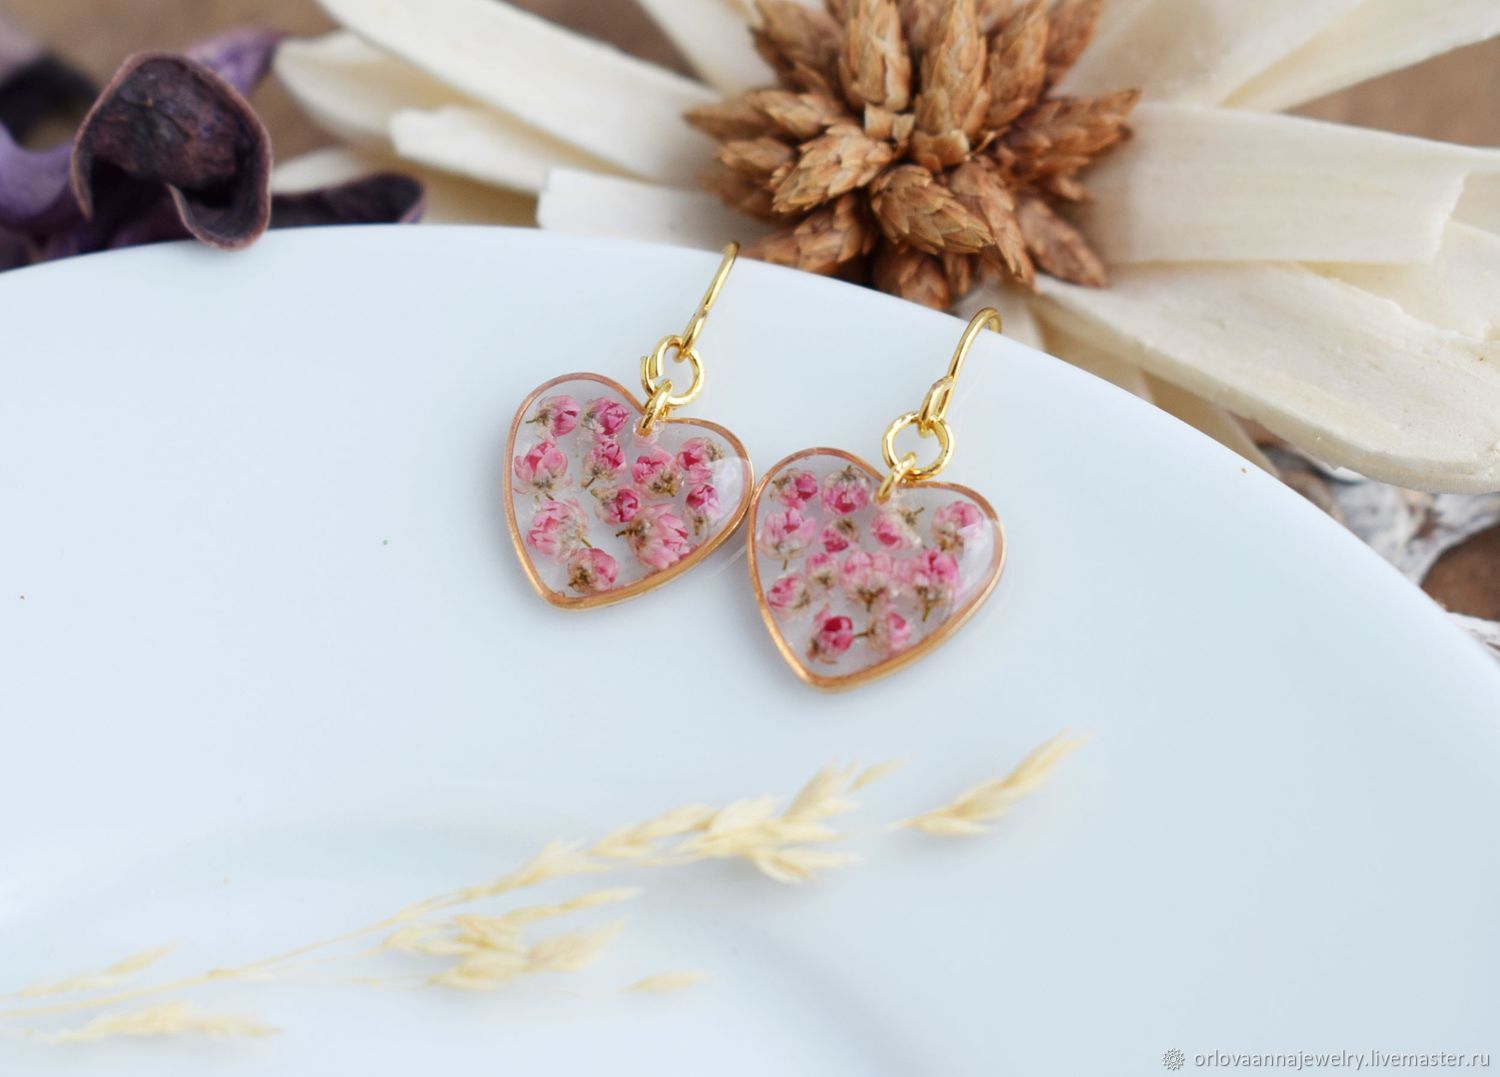 Heart earrings with ozotamnus. Resin earrings with real flowers, Earrings, Moscow,  Фото №1